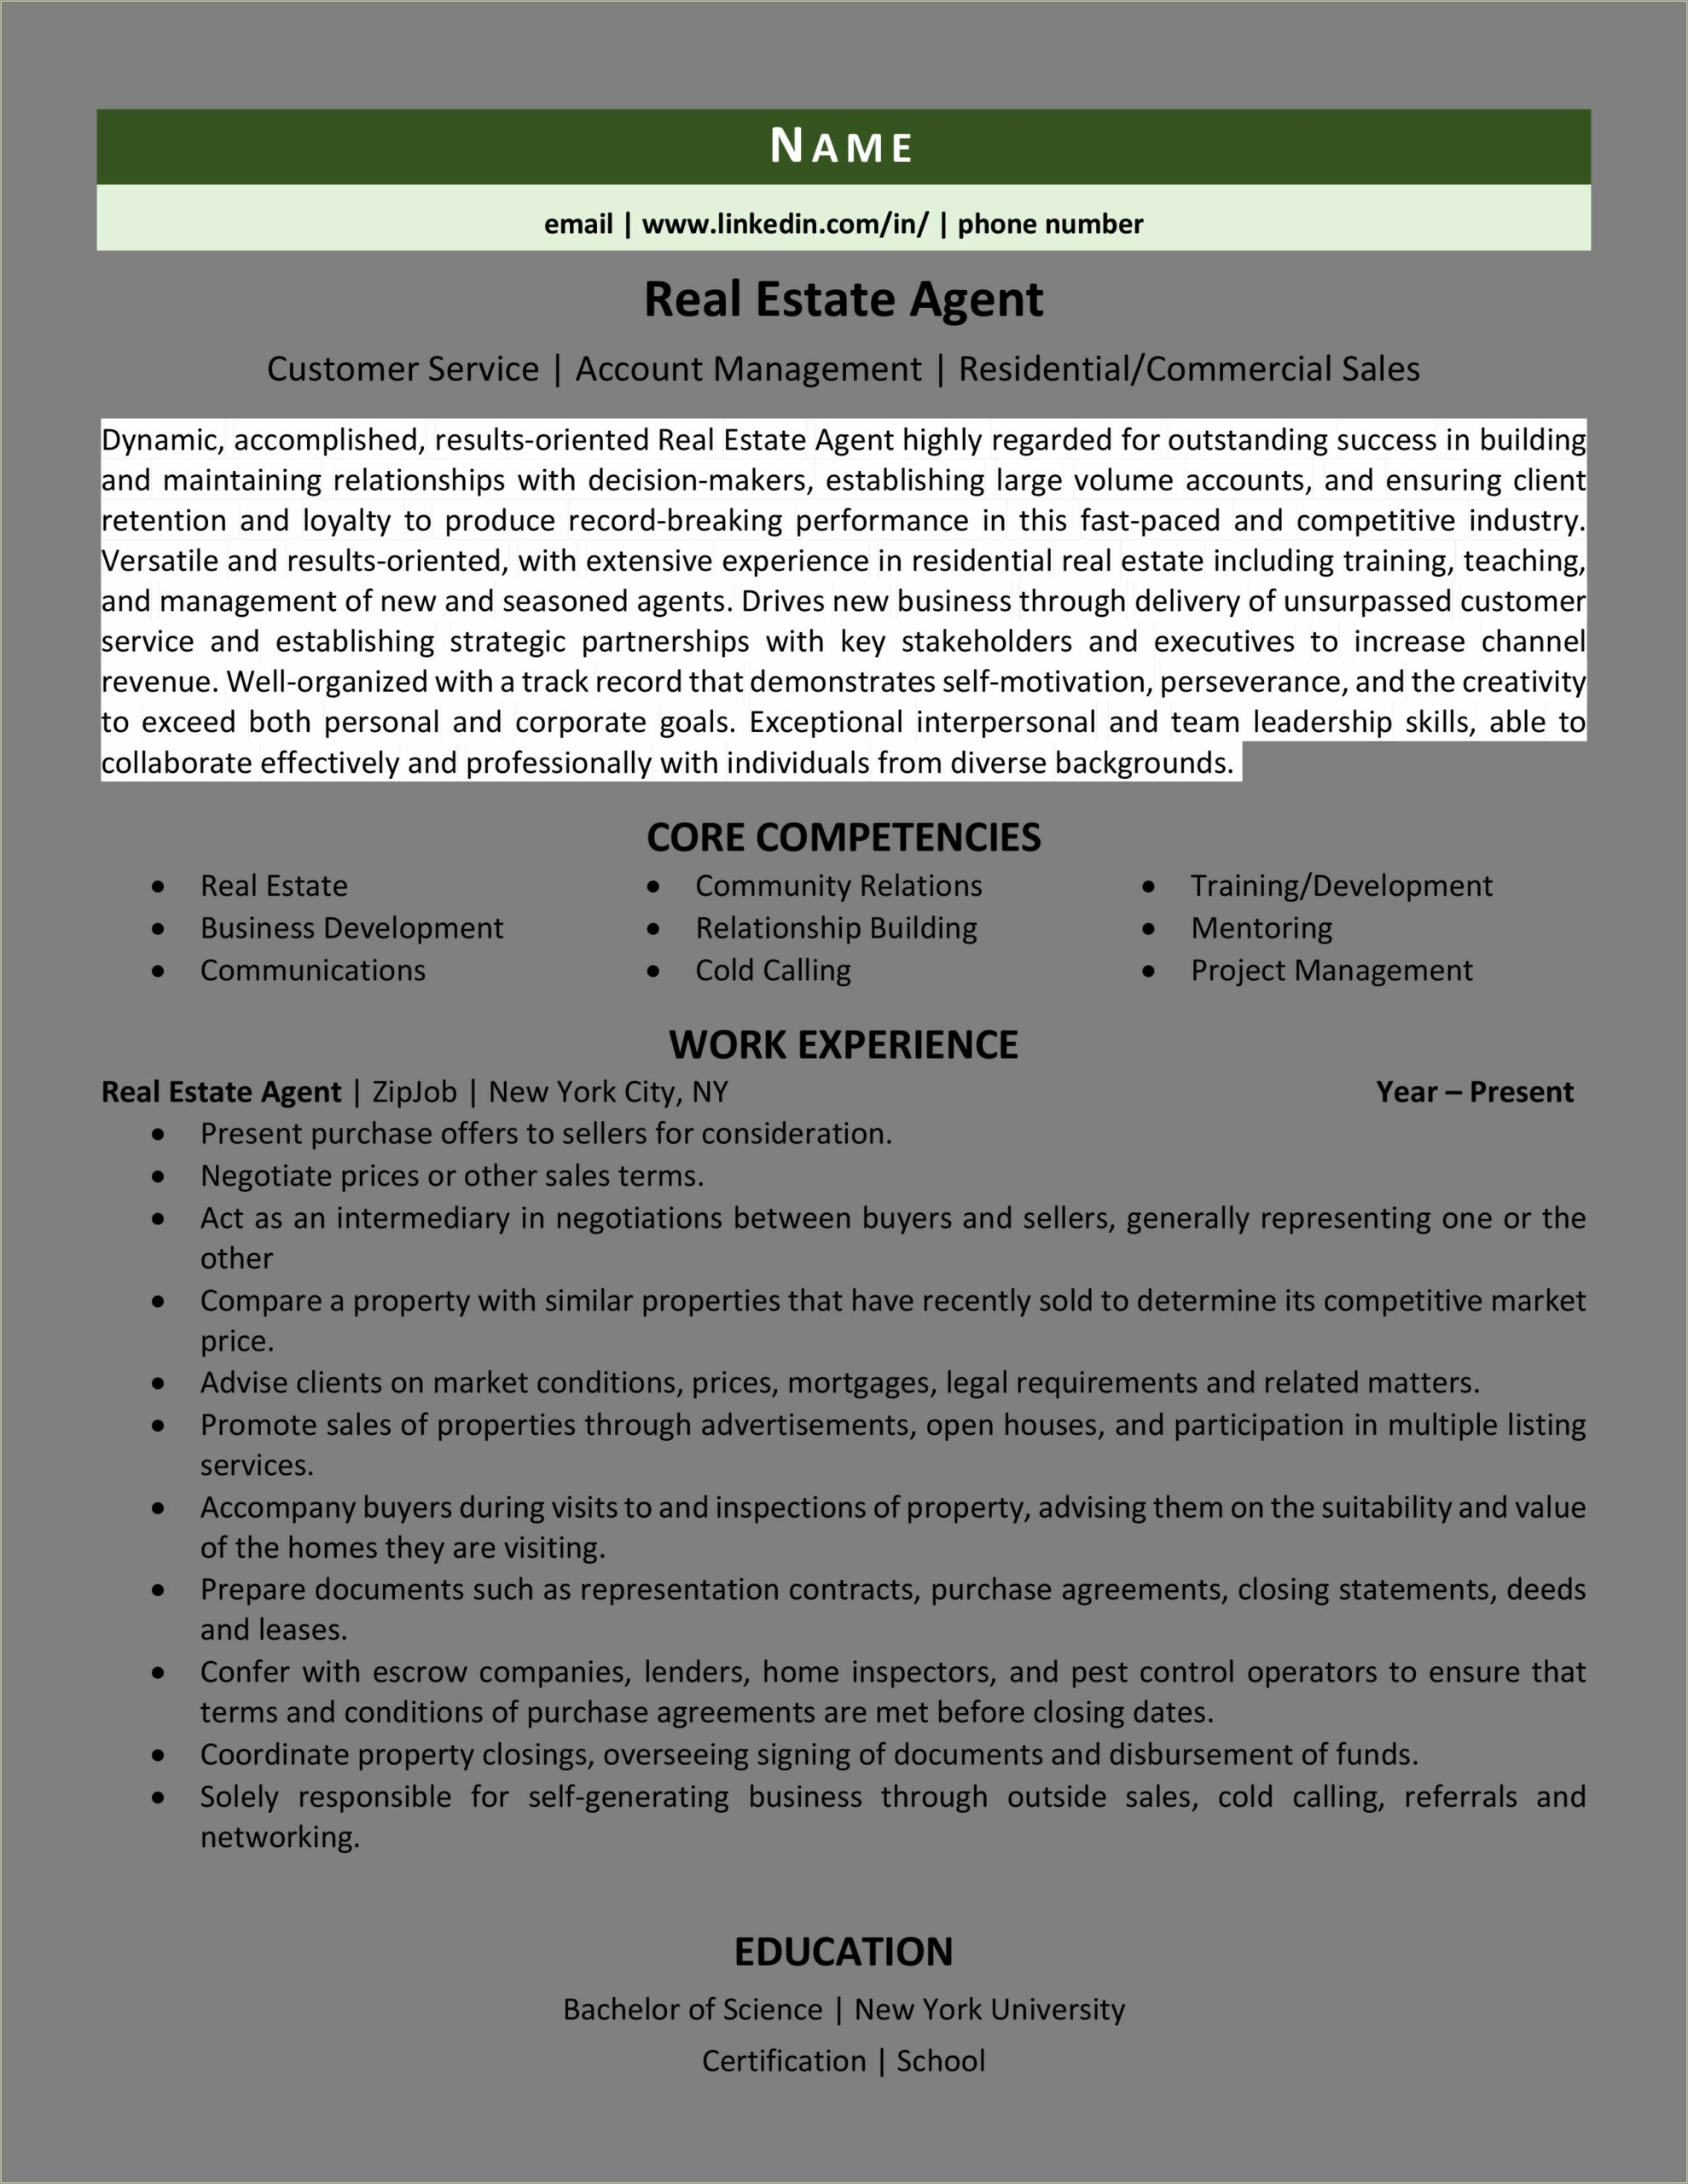 Sample Resume For Real Estate Professional